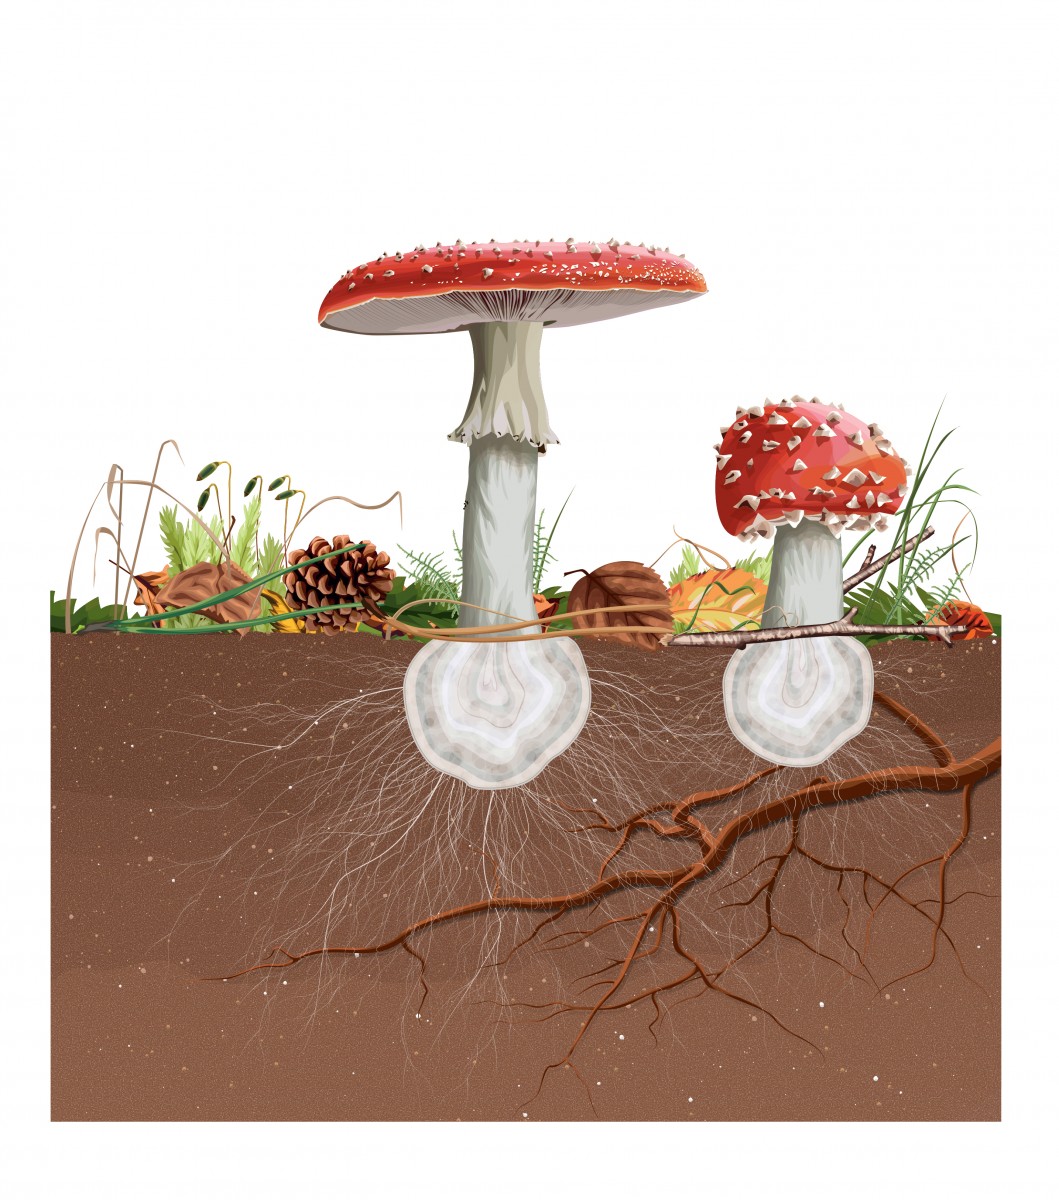 Forest Fungi